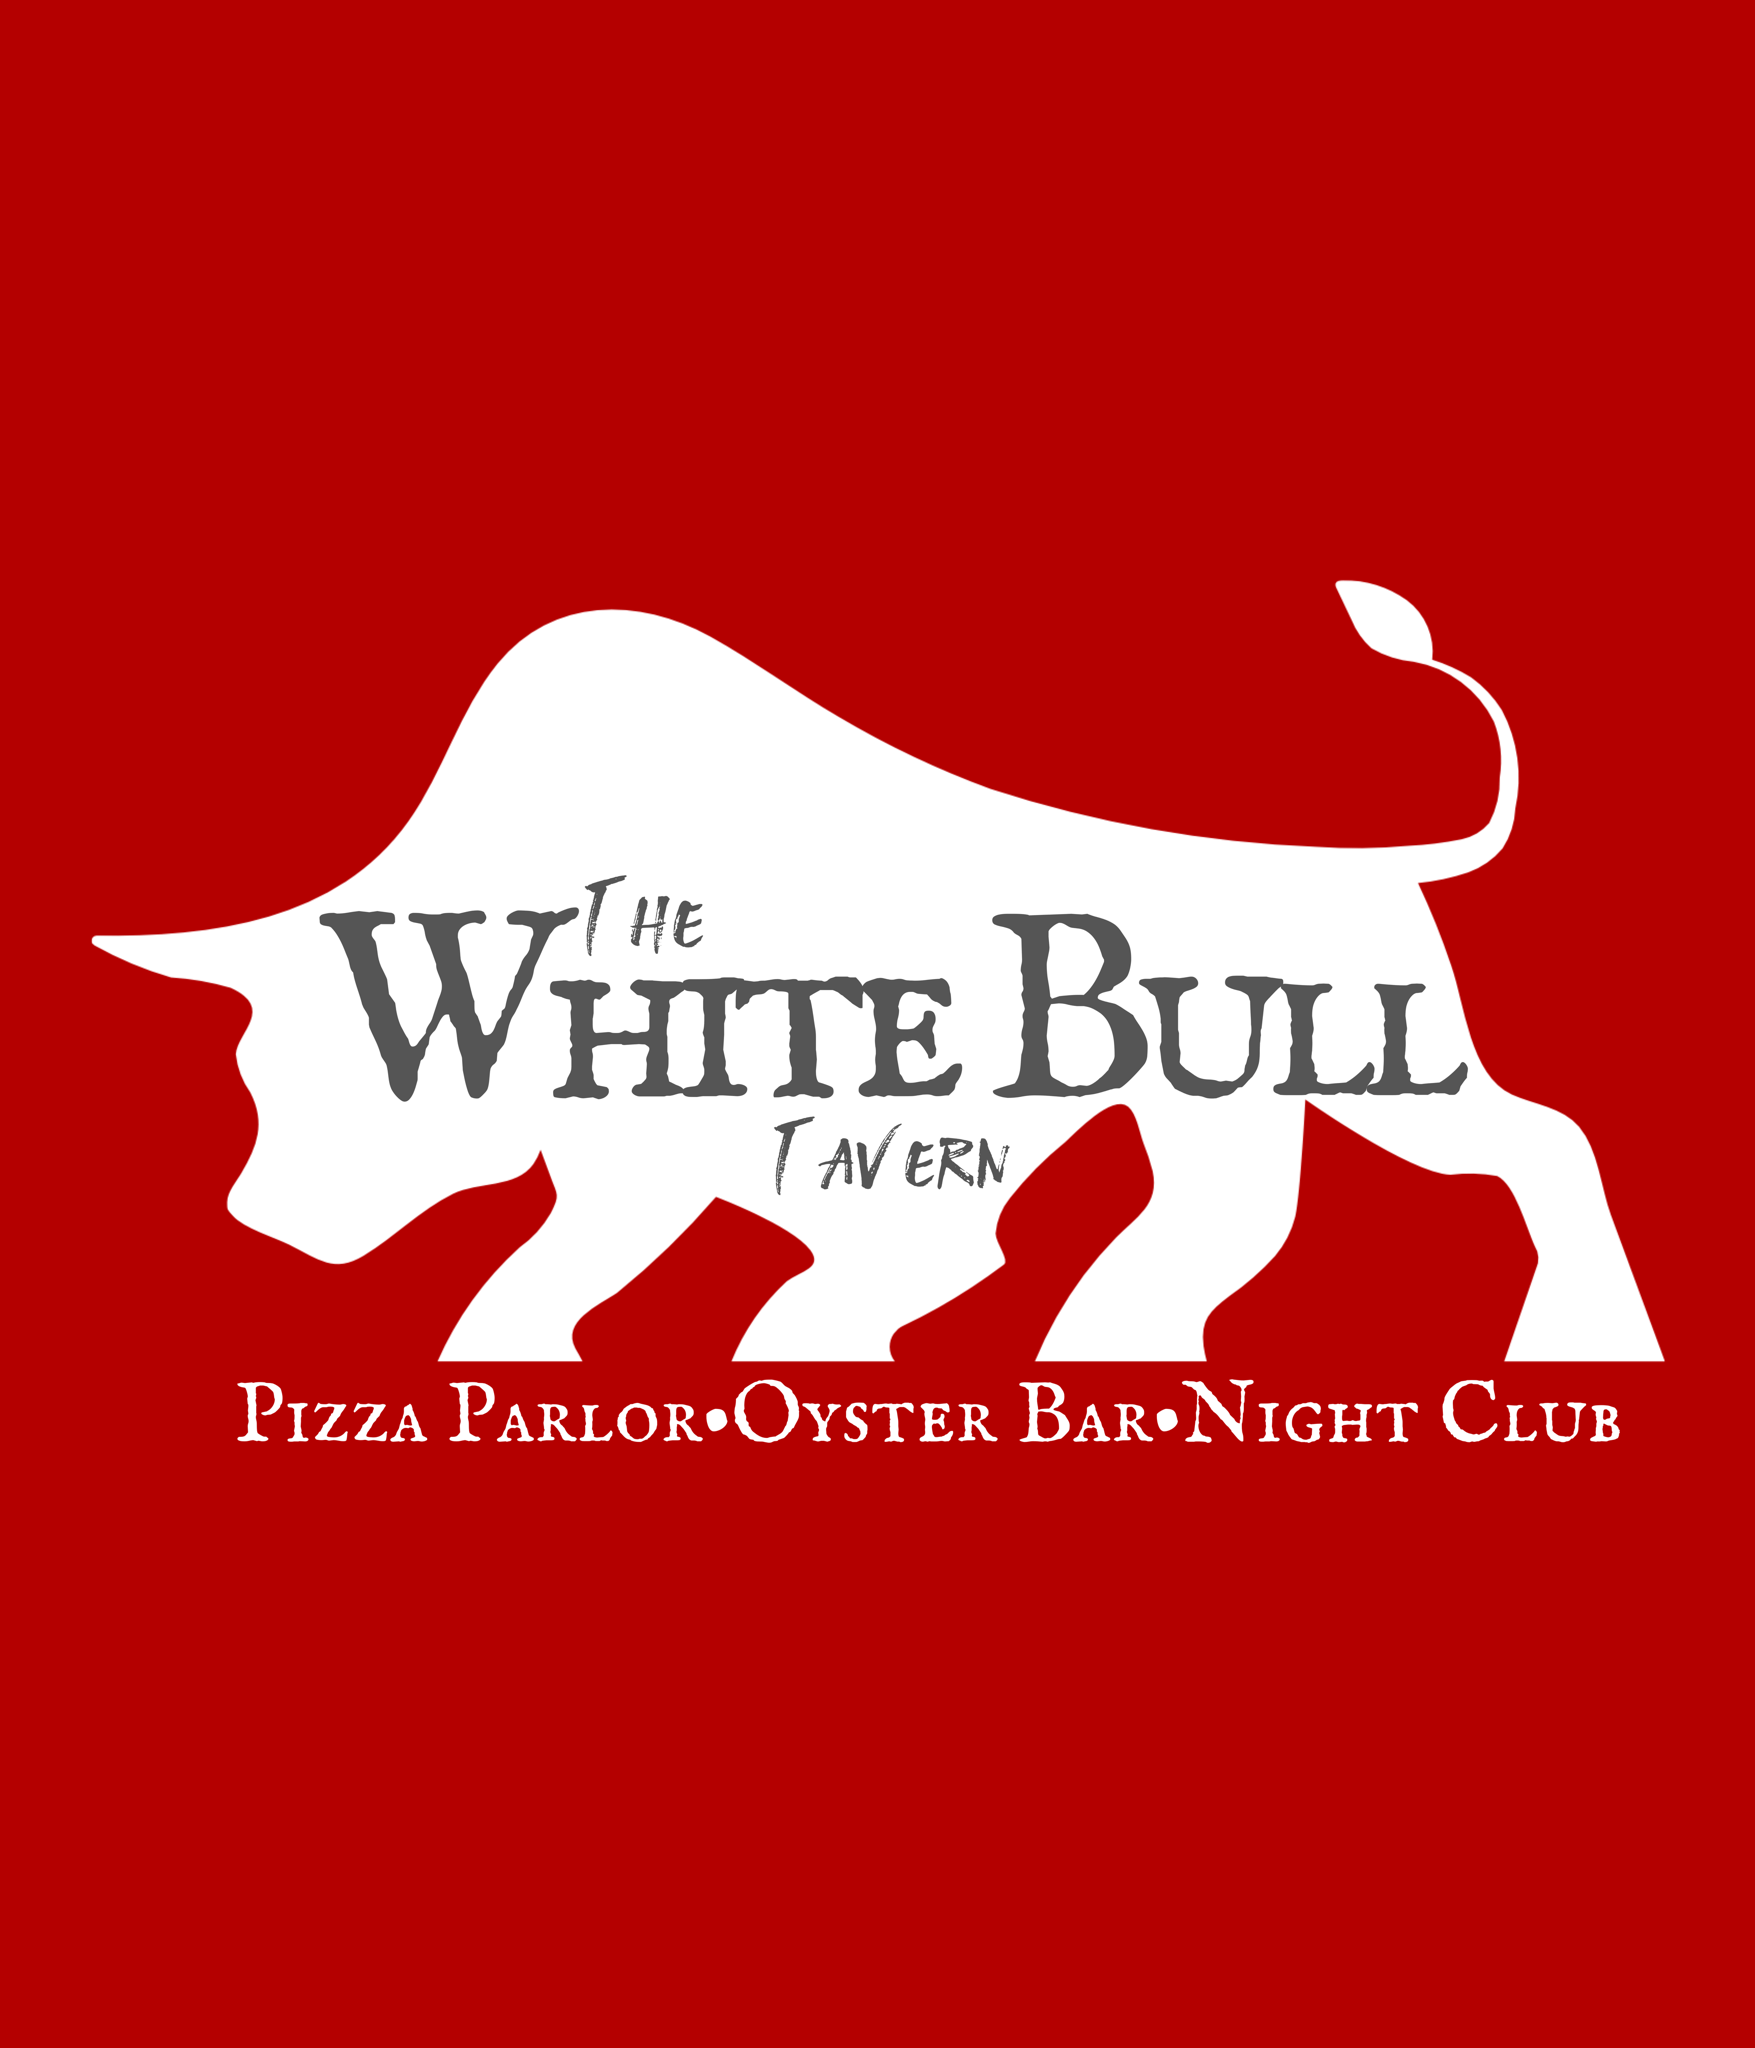 White Bull Logo - The White Bull Tavern Restaurant - Faneuil Hall Downtown Boston MA.